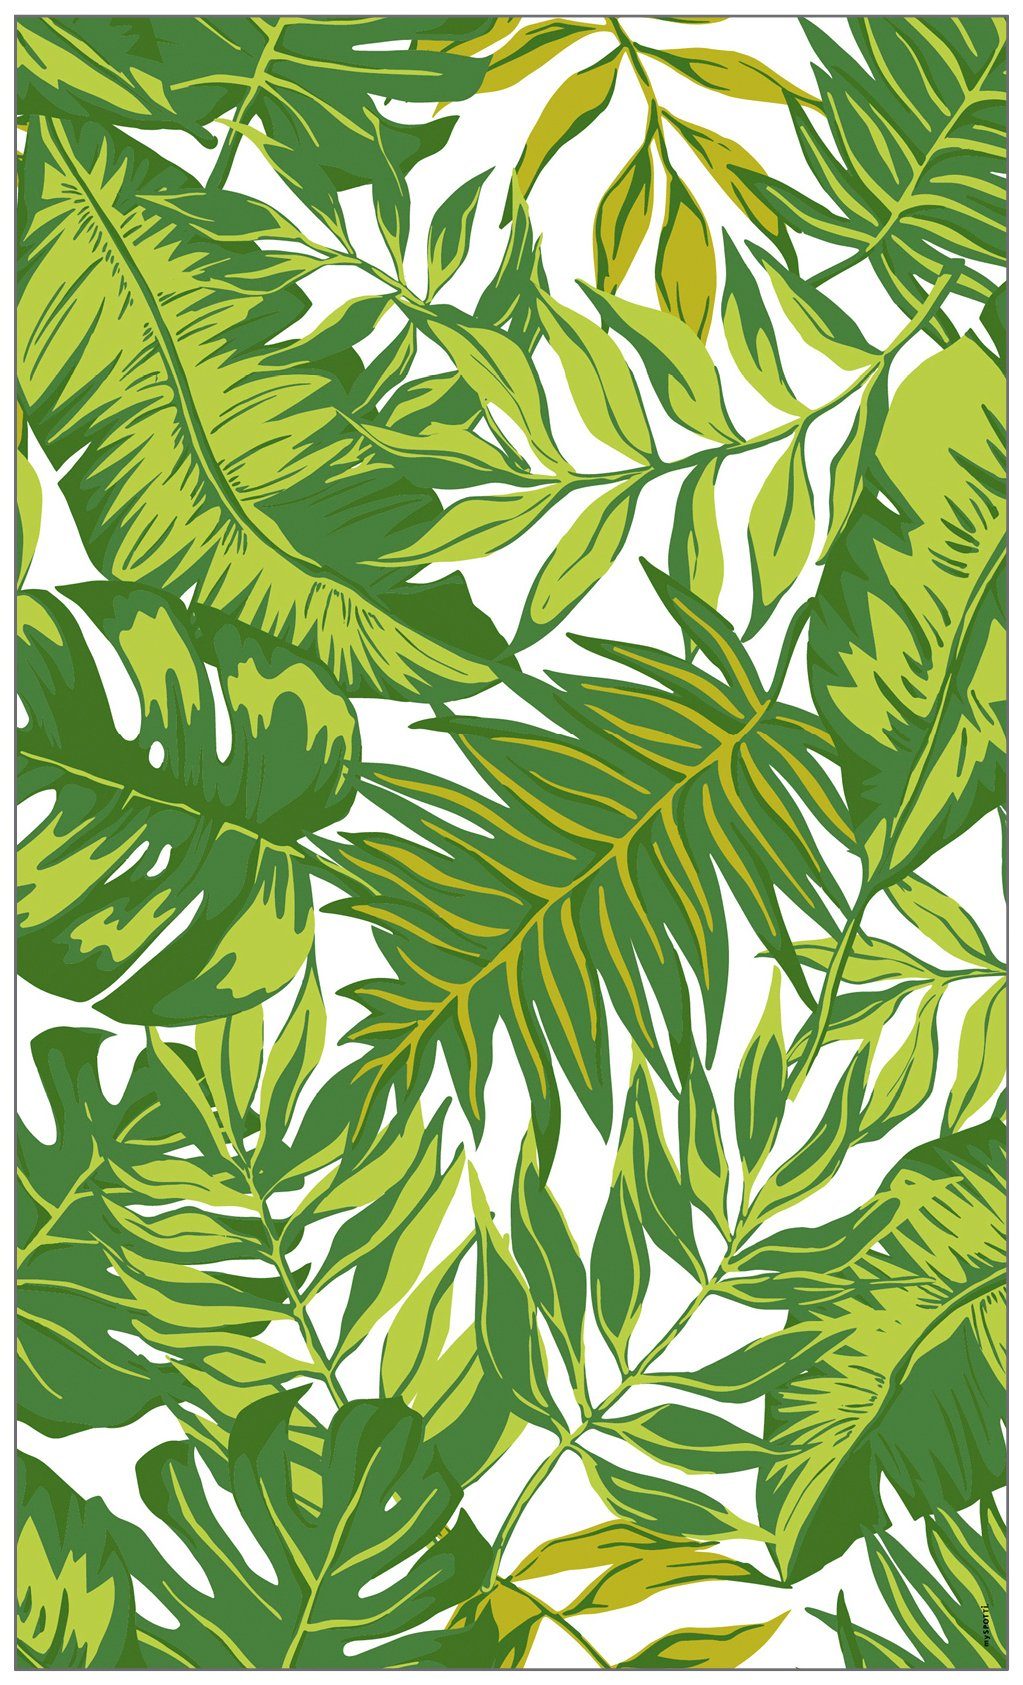 Fensterfolie Look Palm 60 100 green, haftend cm, statisch glatt, MySpotti, x Leaves halbtransparent